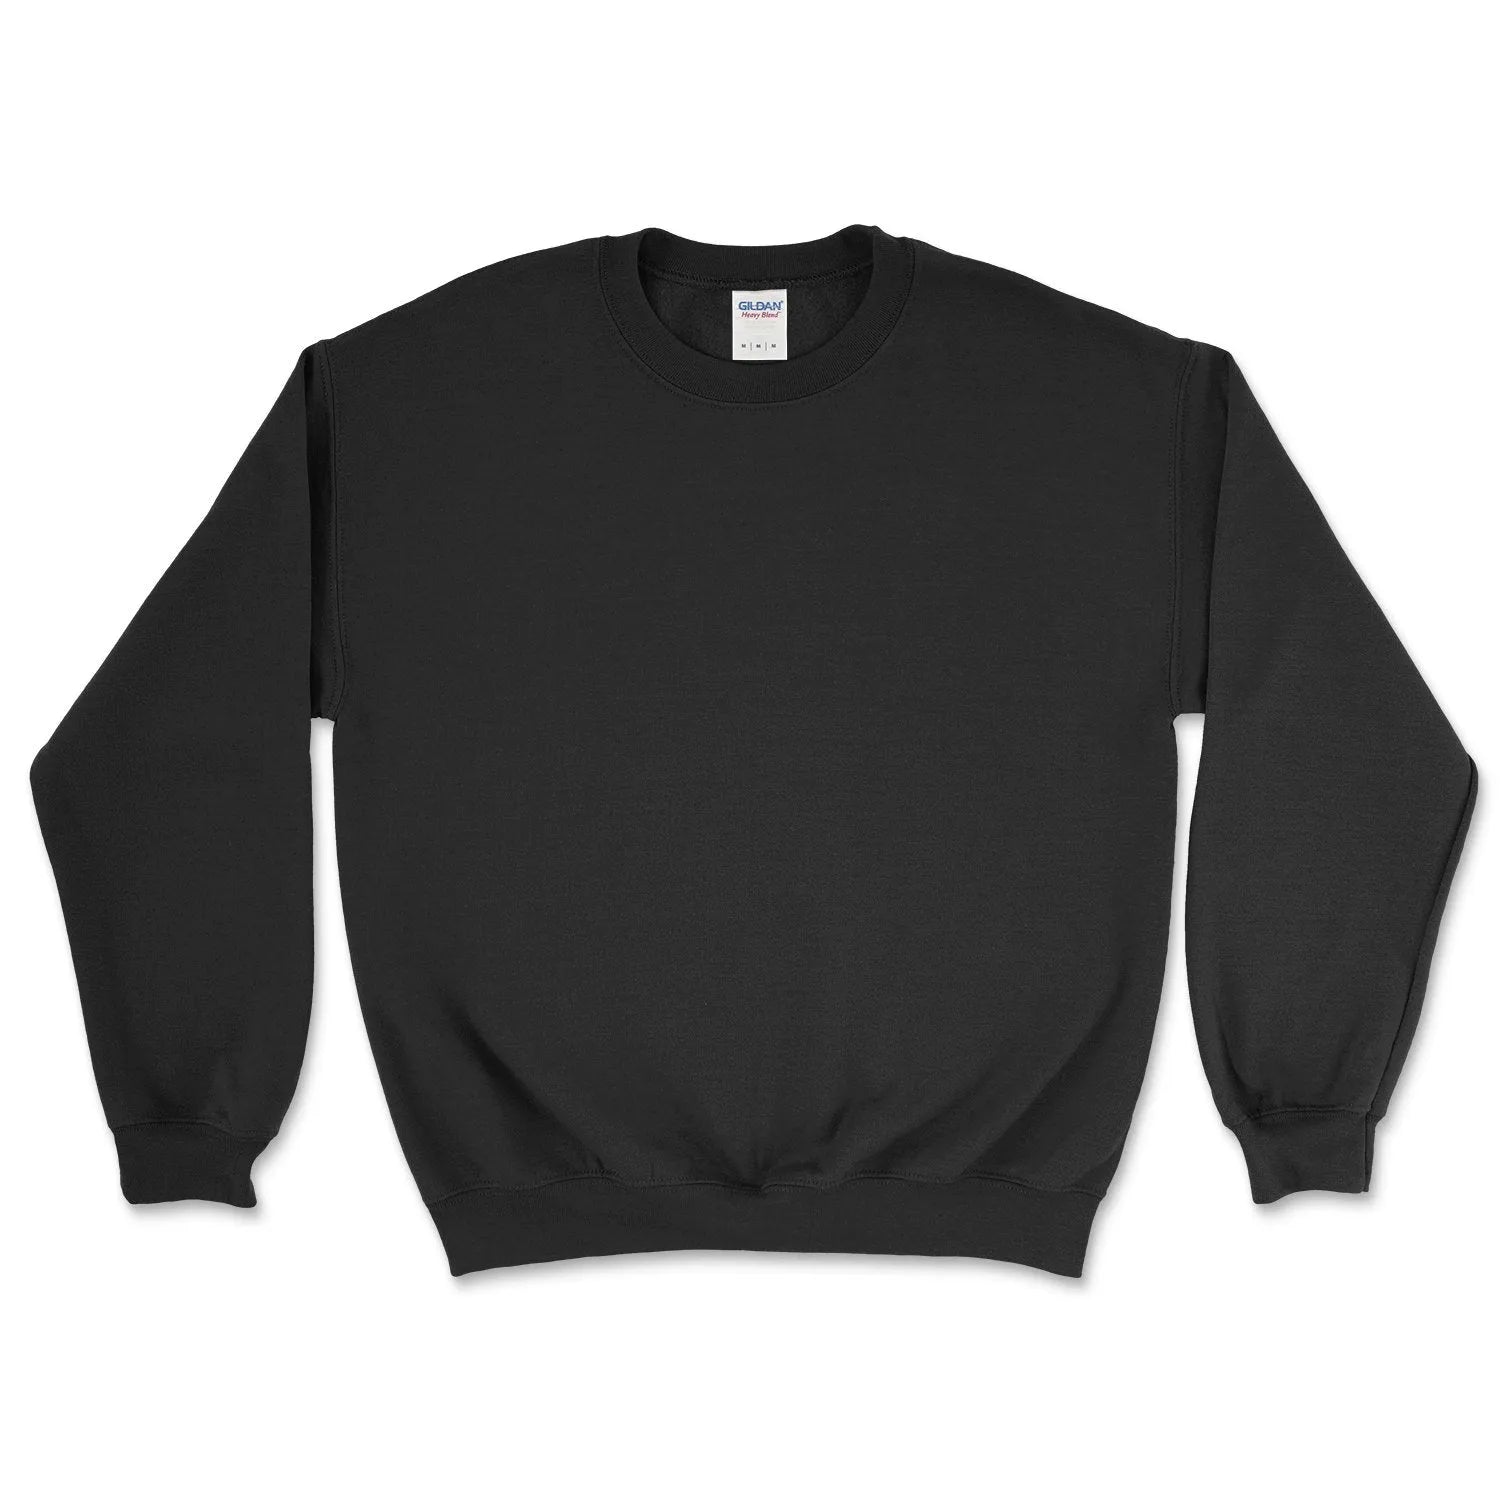 Gildan 18000 Sweatshirt Mock-up Dark Heather Gray